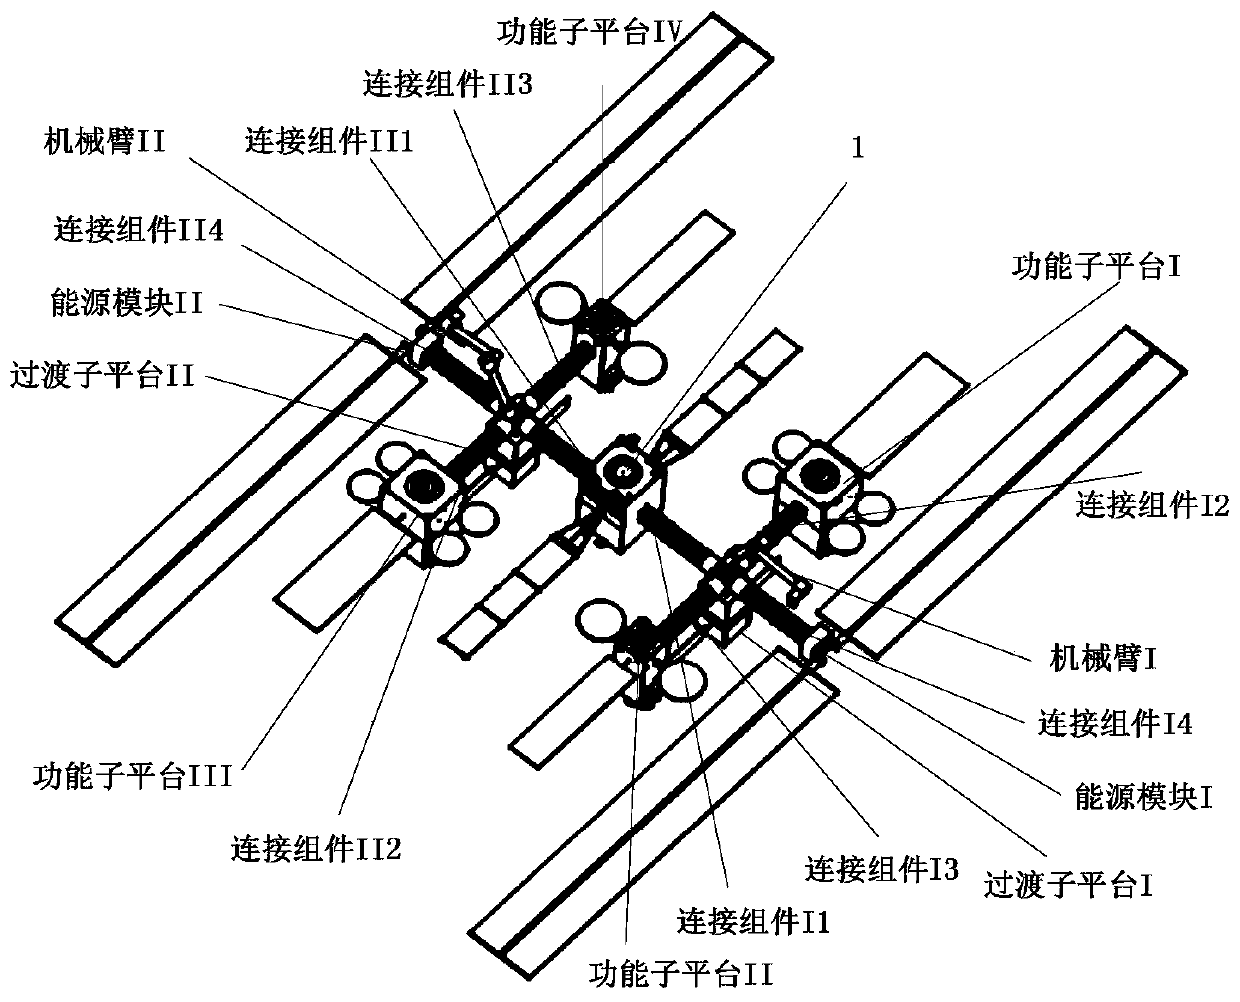 Stationary orbit ultra-large type assemblable satellite platform configuration and on-orbit assembly method